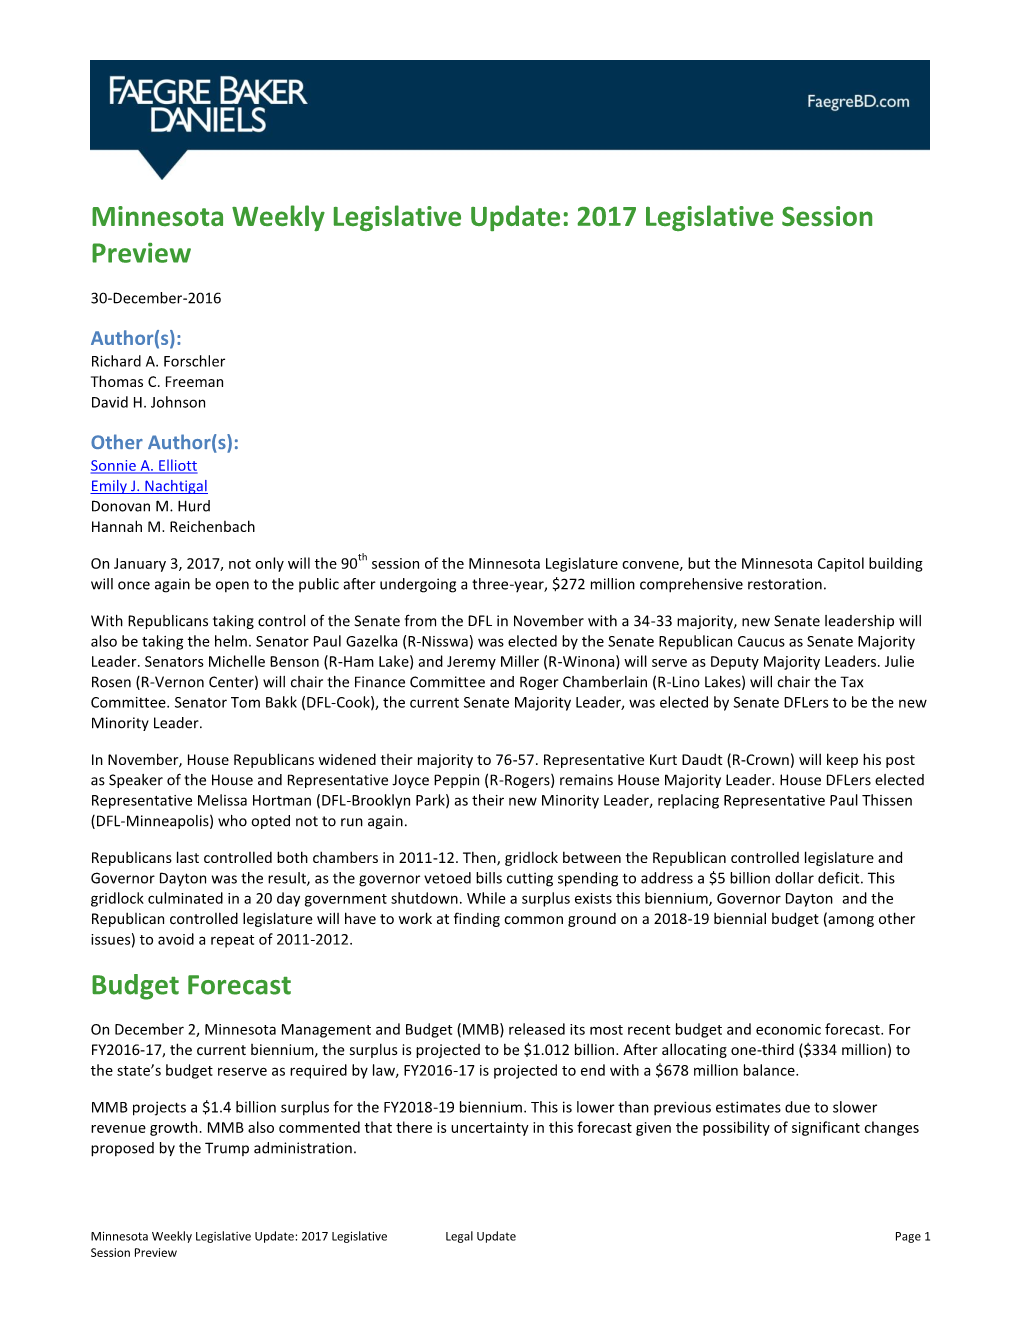 Minnesota Weekly Legislative Update: 2017 Legislative Session Preview